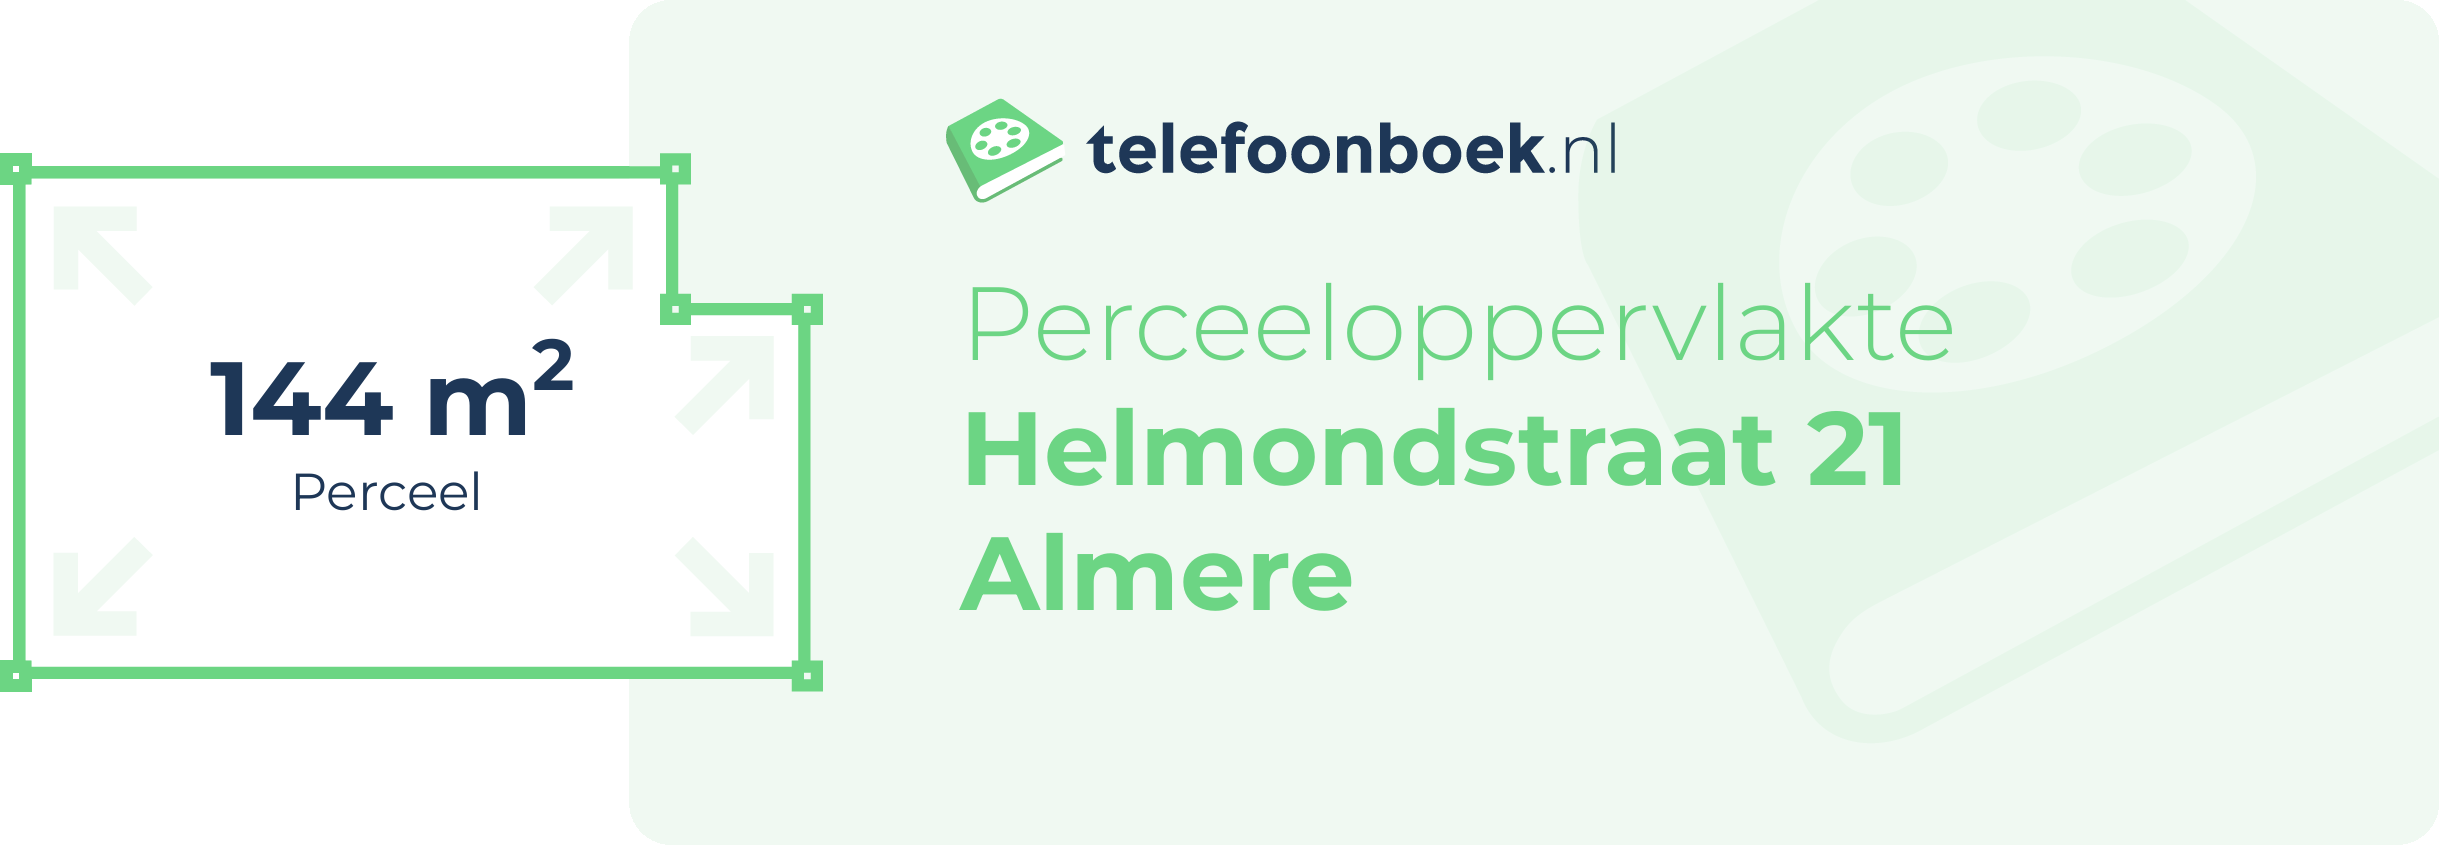 Perceeloppervlakte Helmondstraat 21 Almere